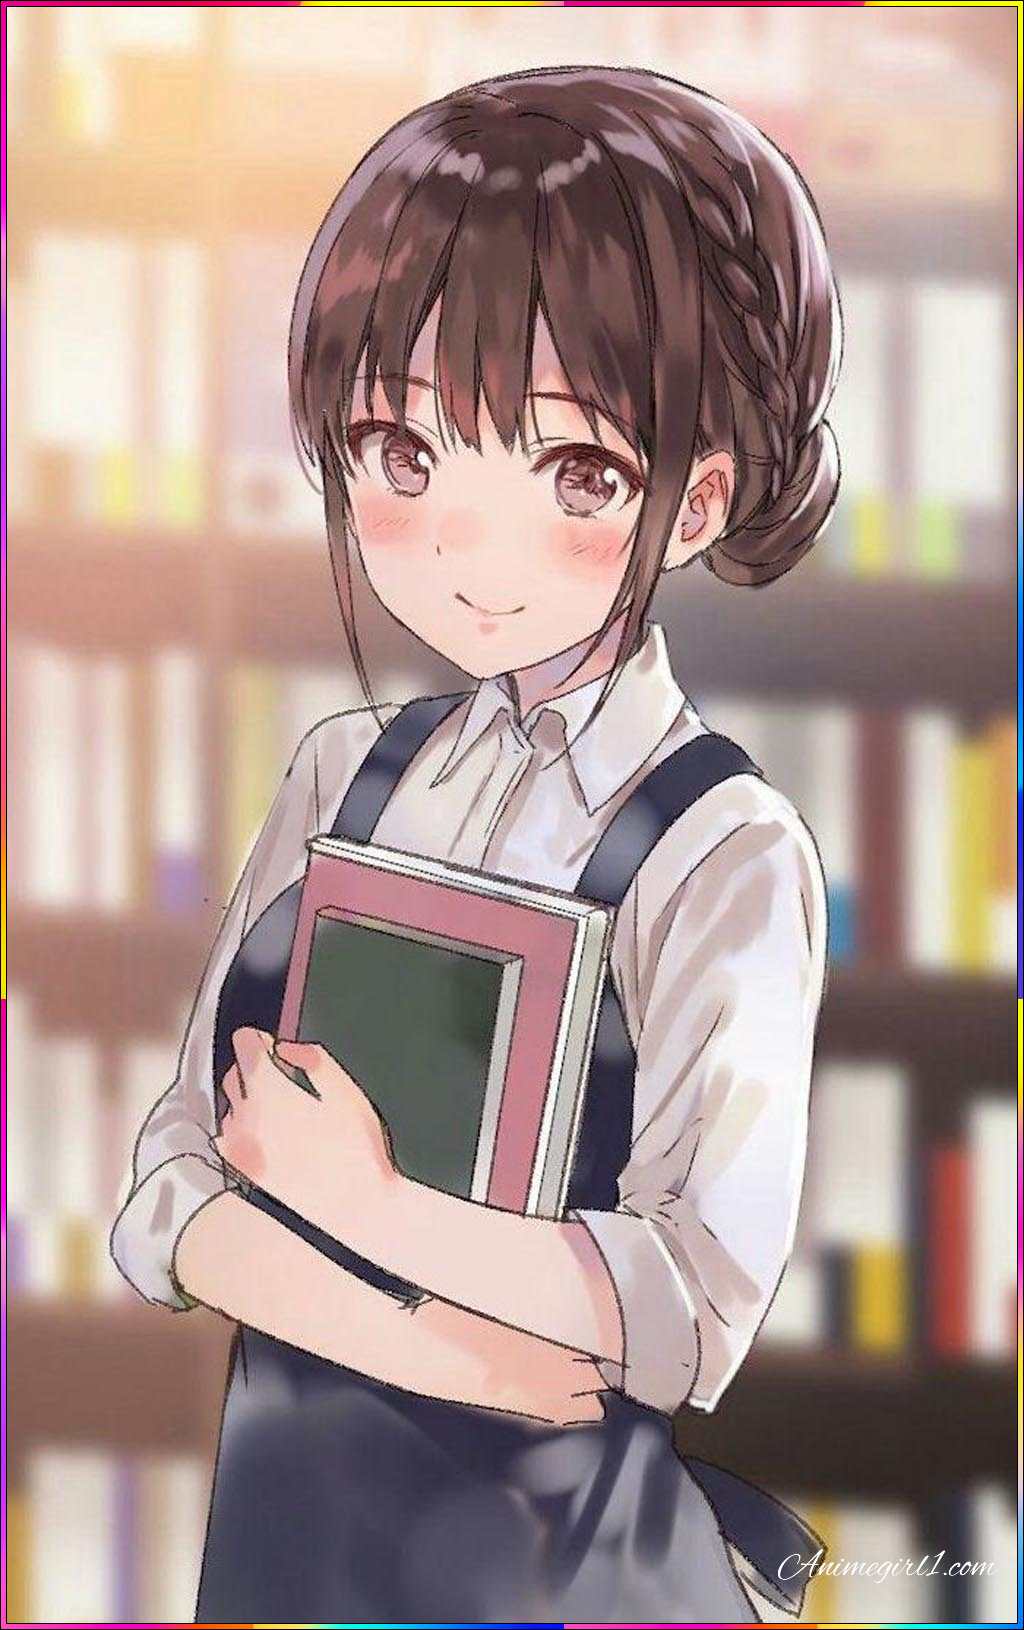 anime girl with books